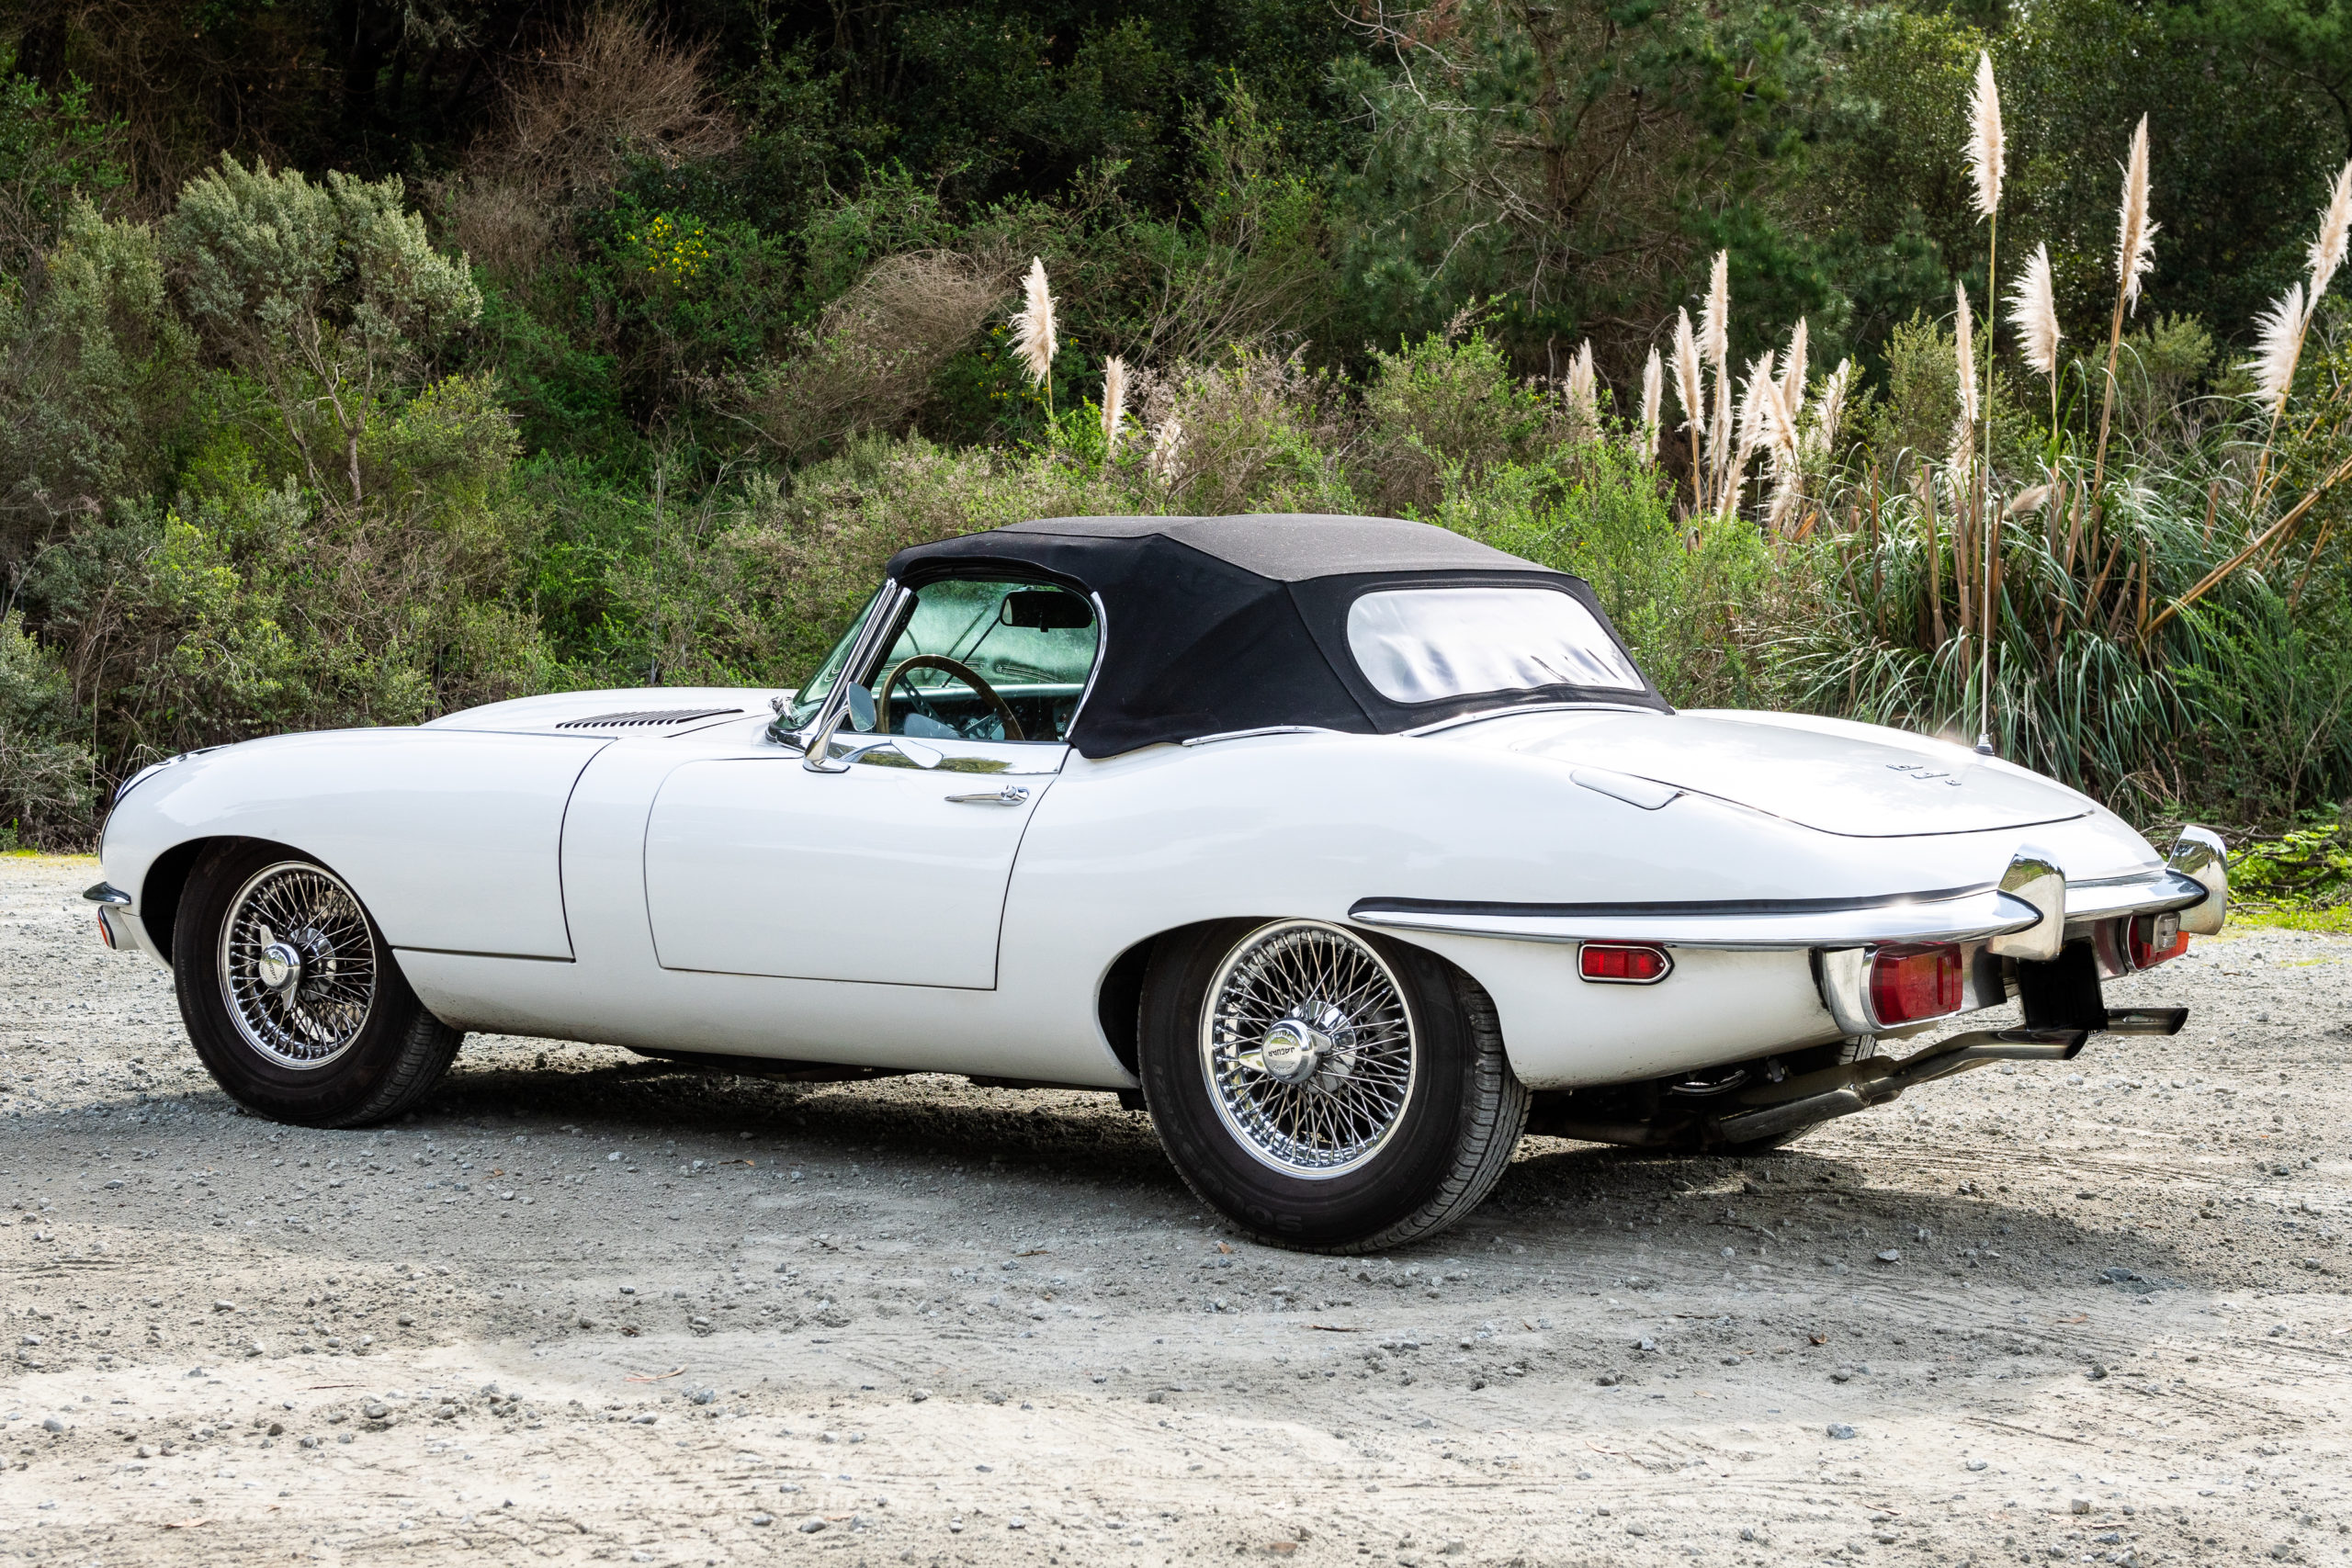 1961 Jaguar E-Type Sells For $1.14M, Sets Record At Auction